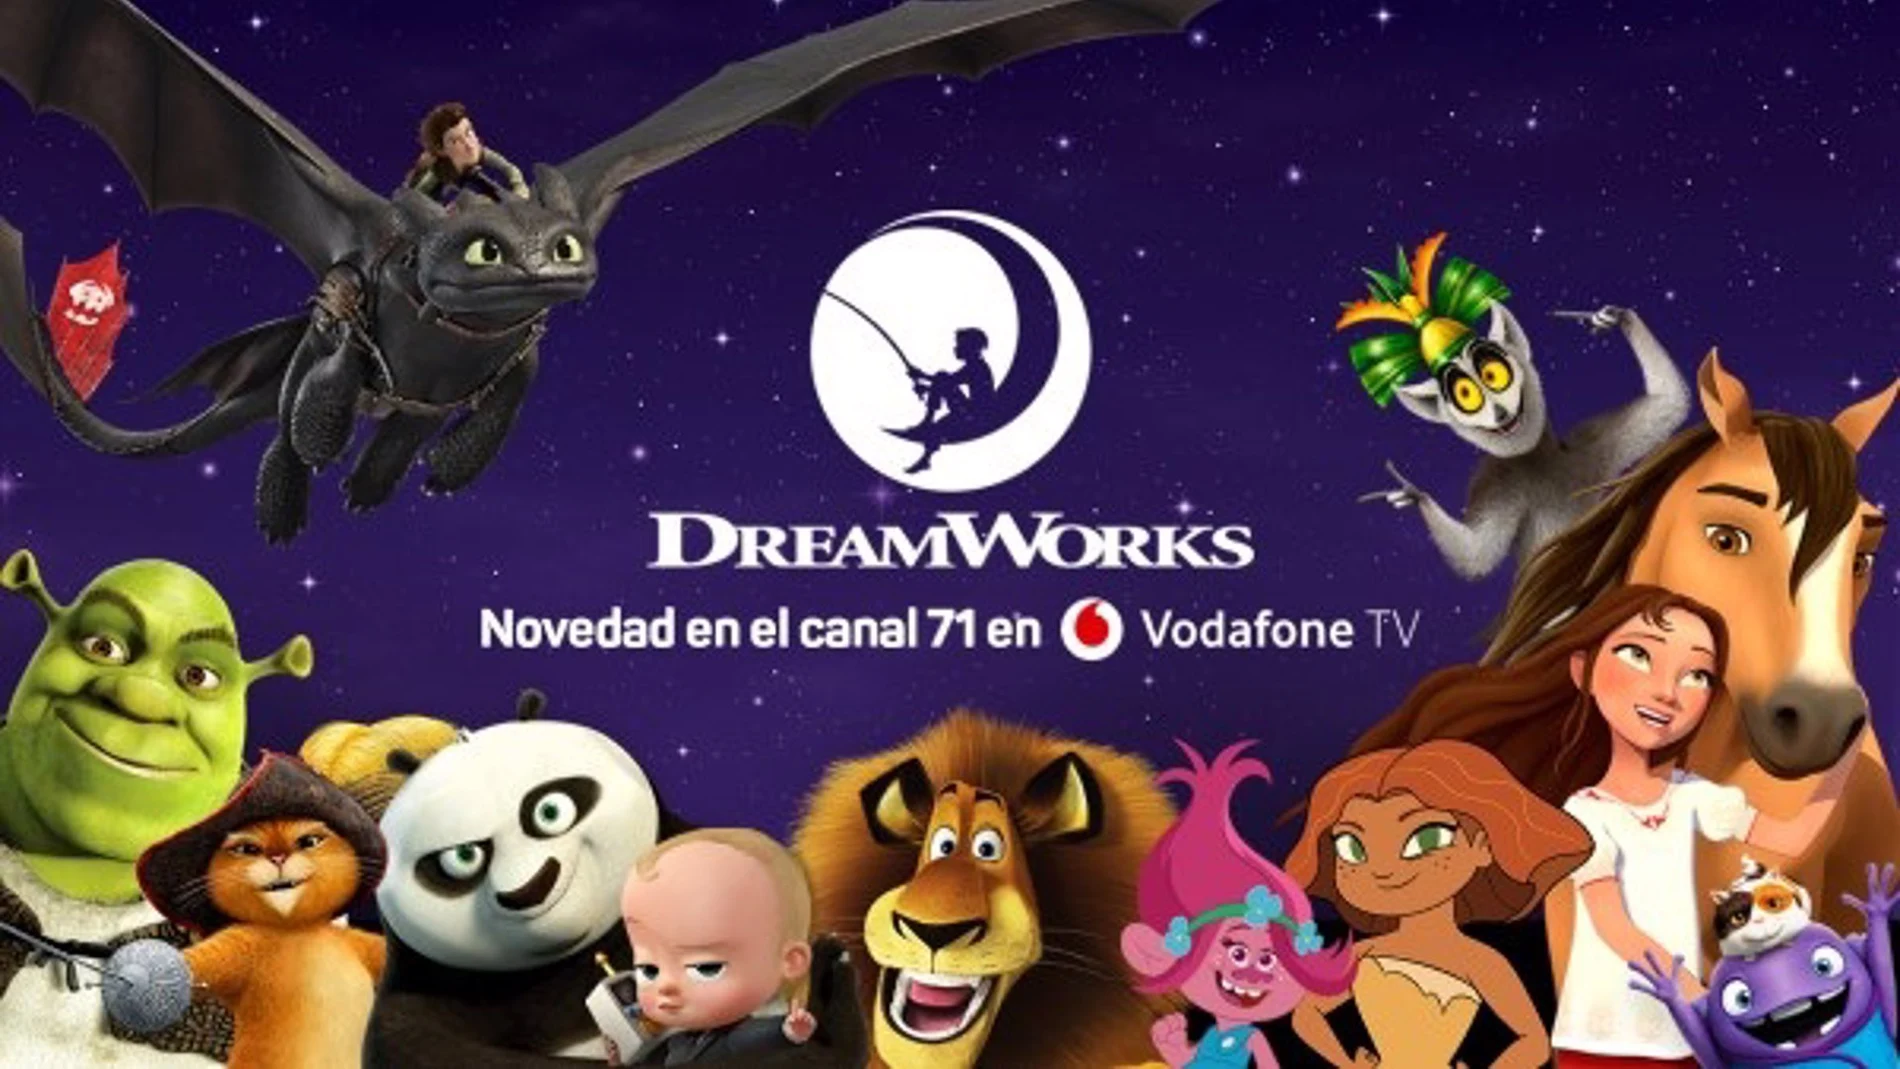 Vodafone TV incorpora el canal DreamWorks de entretenimiento infantil y familiar